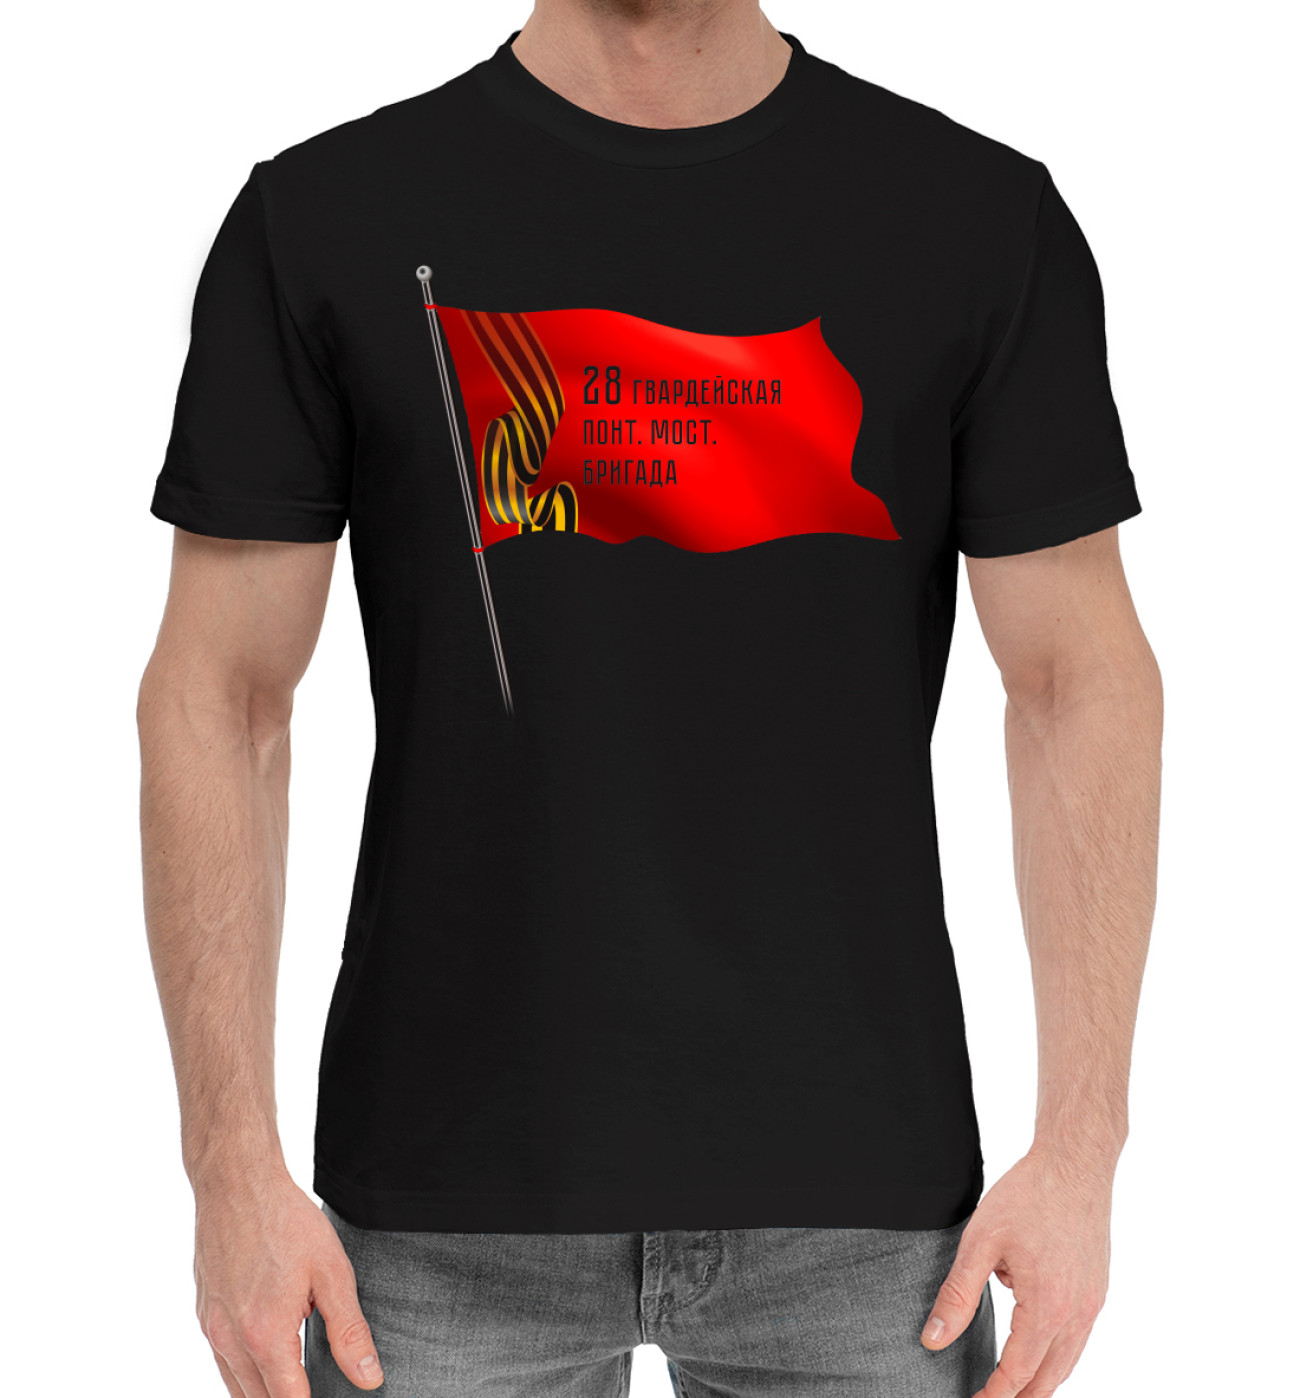 Мужская Хлопковая футболка 28 гвардейская понт. мост. бригада, артикул: NNE-514025-hfu-2